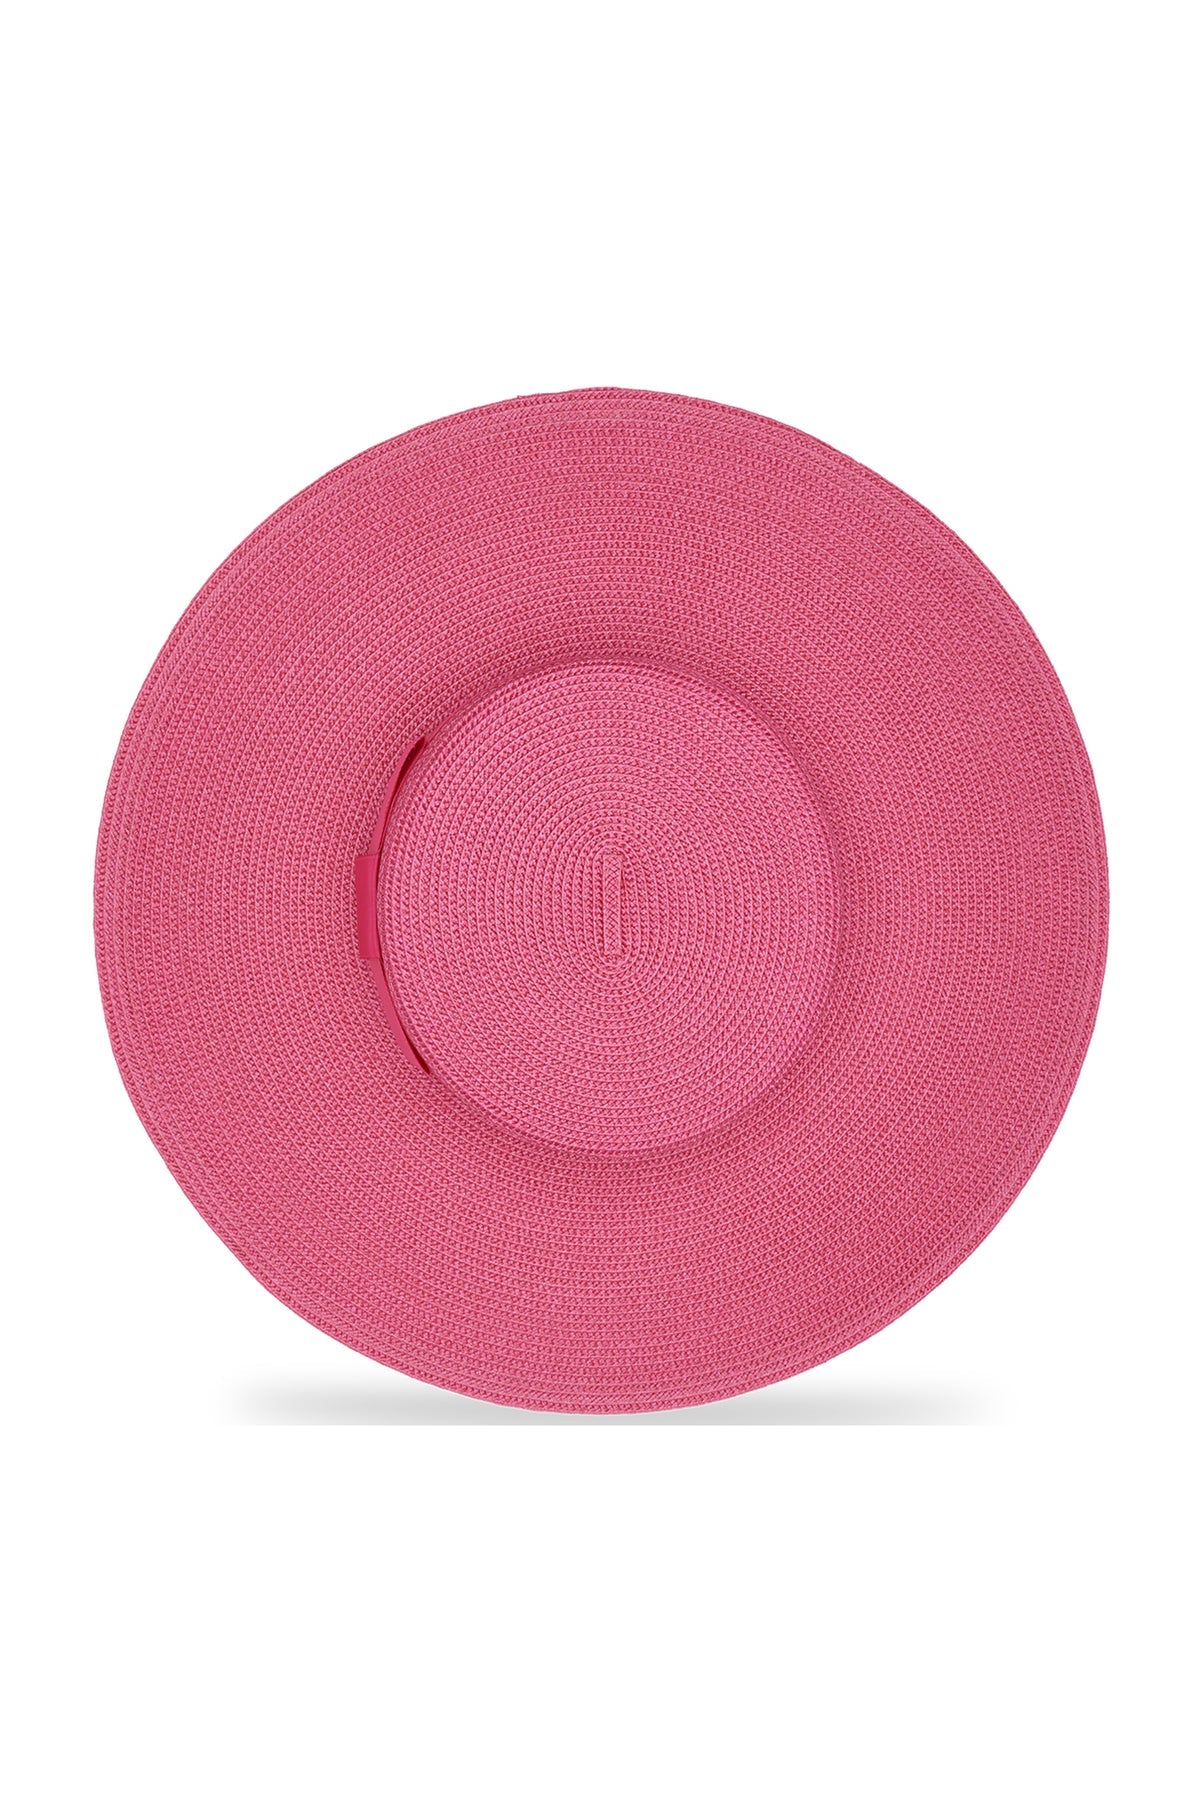 MORGAN & TAYLOR Macy Boater Hat (Pink)